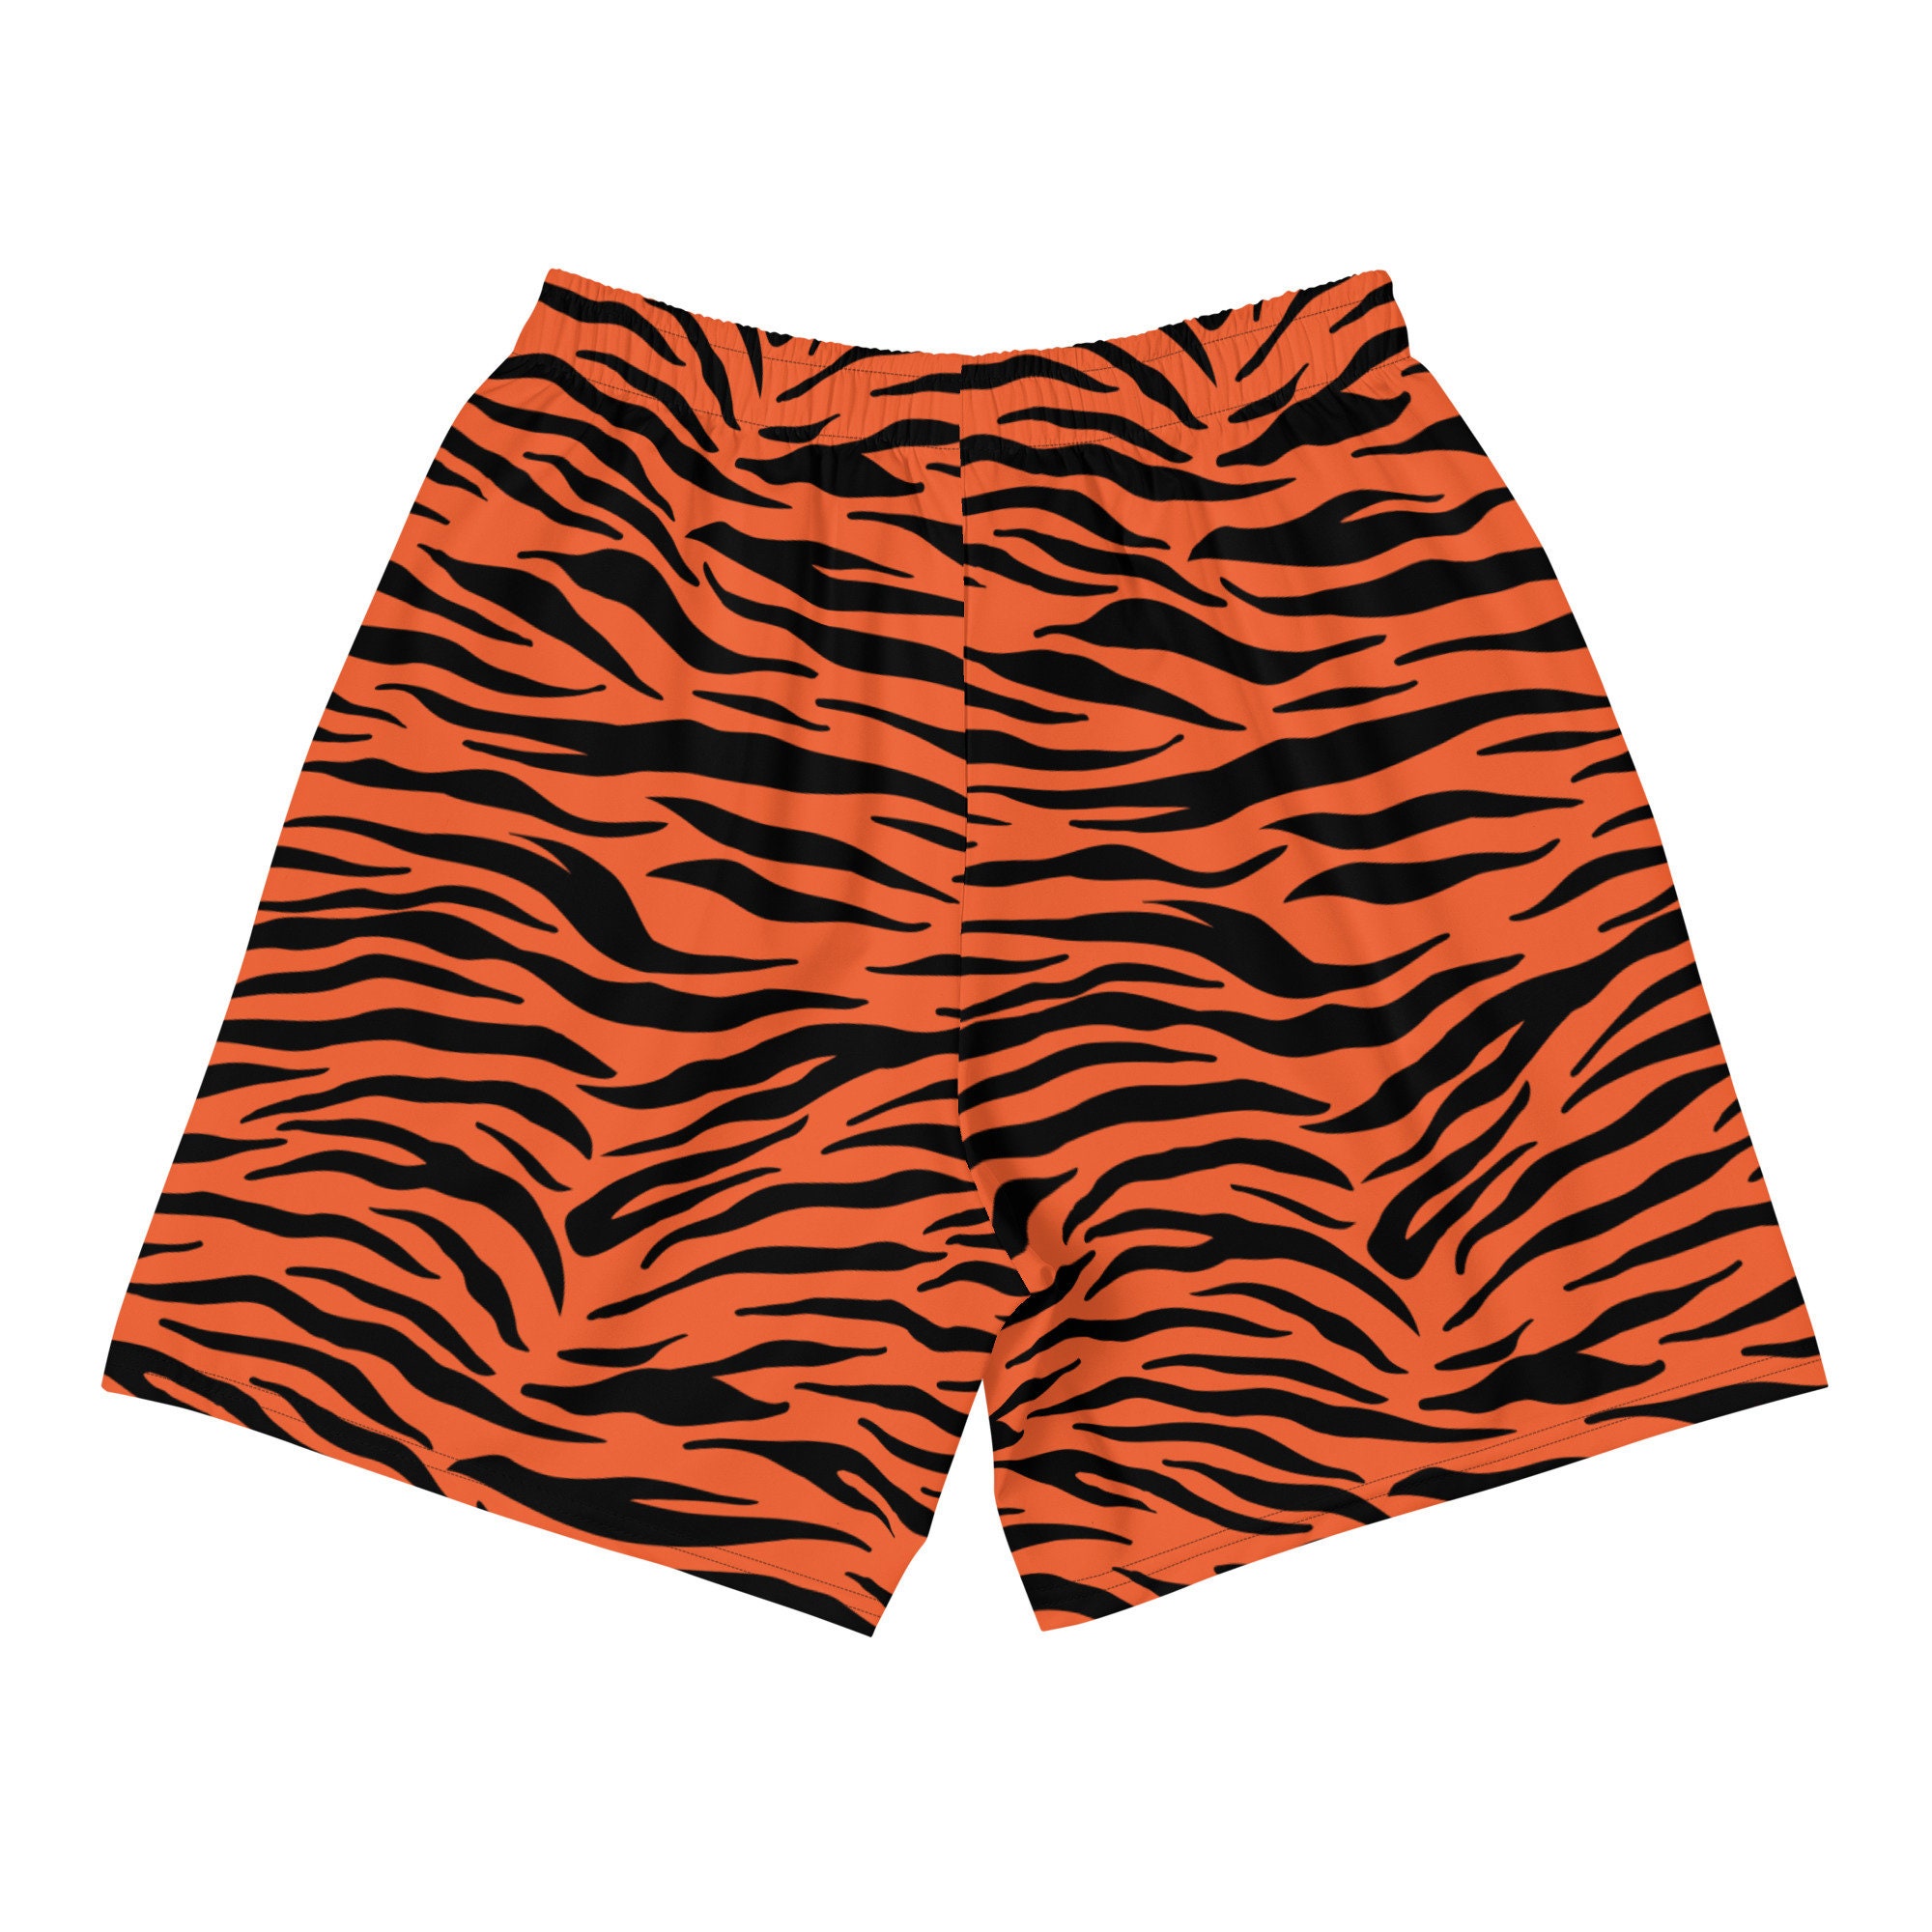 Men's Tiger Striped Shorts